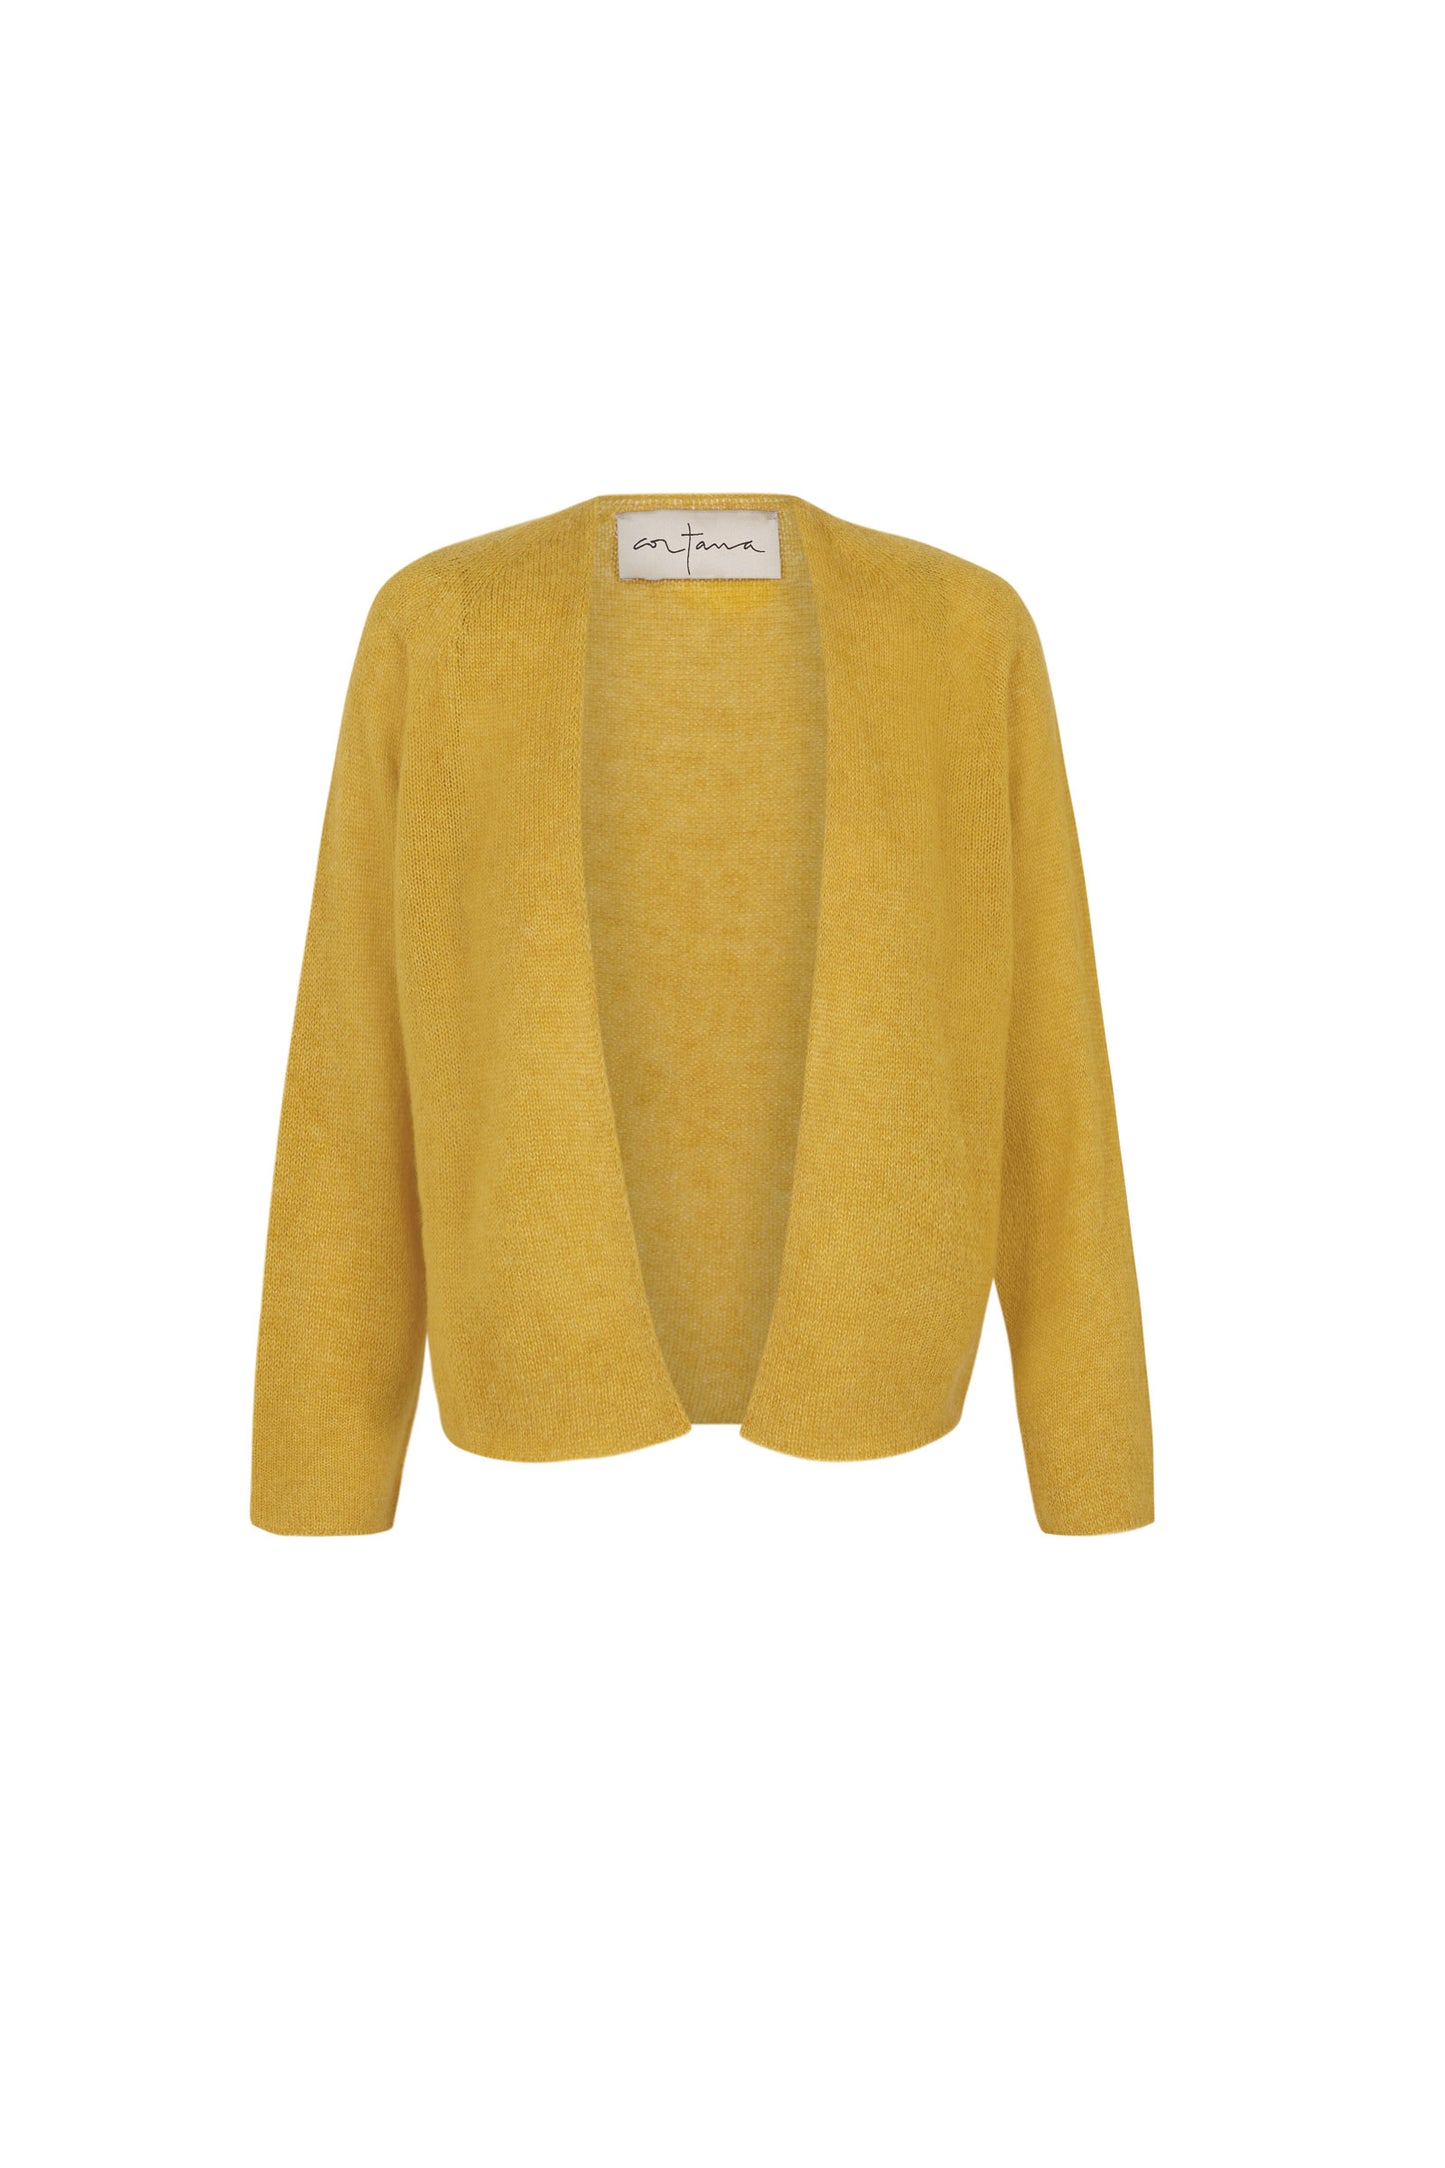 Mar, yellow knitwear cardigan in alpaca, cashmere and silk